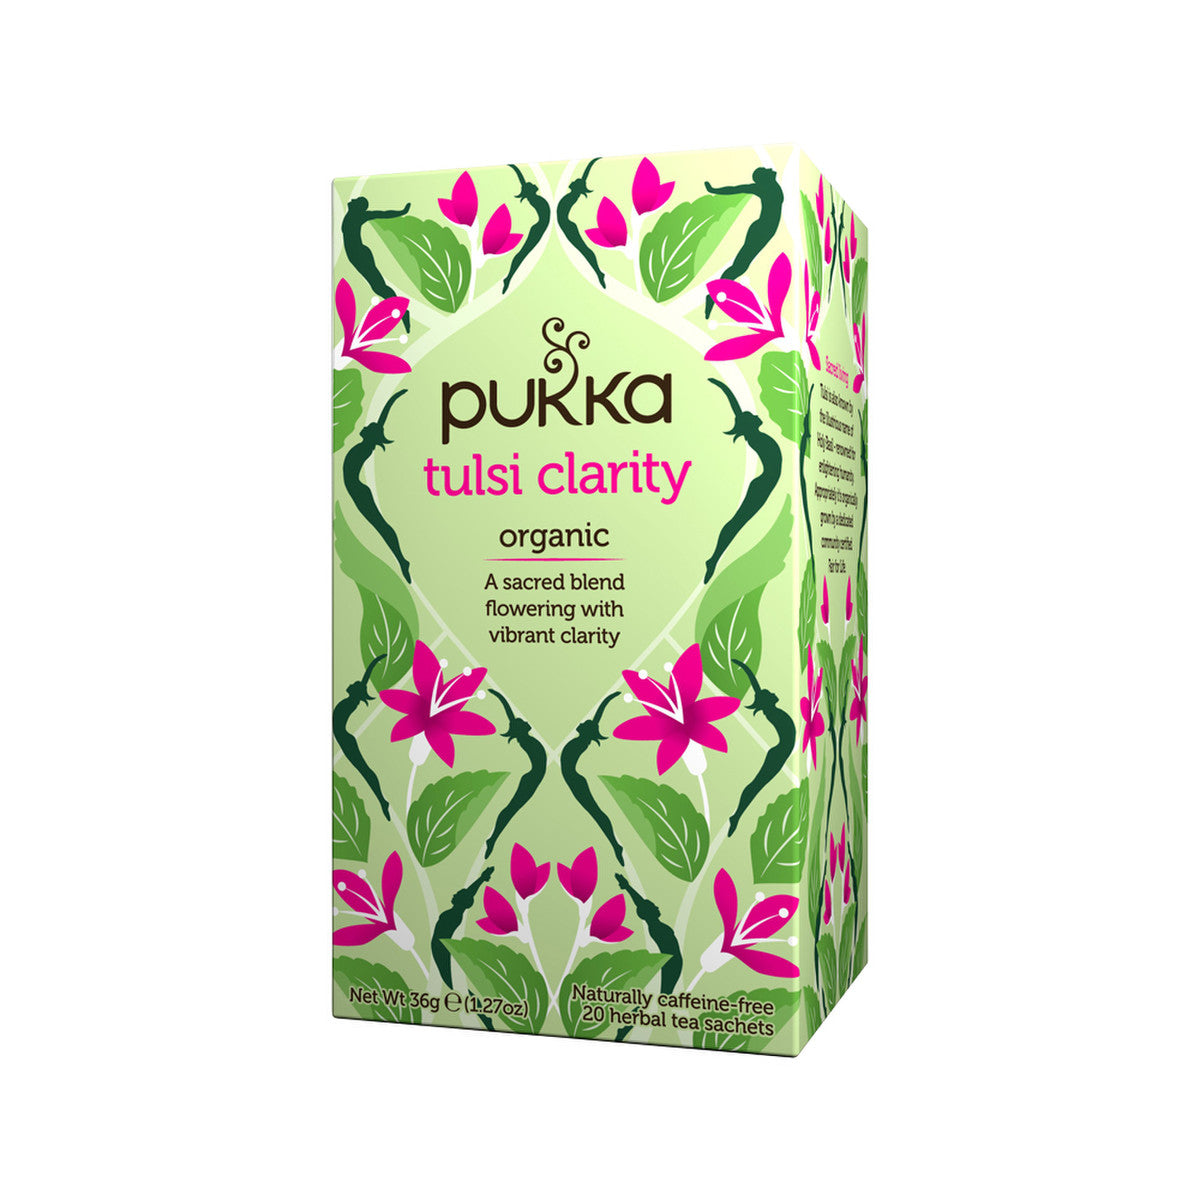 Pukka Tusli Clarity 20 Tea Bags